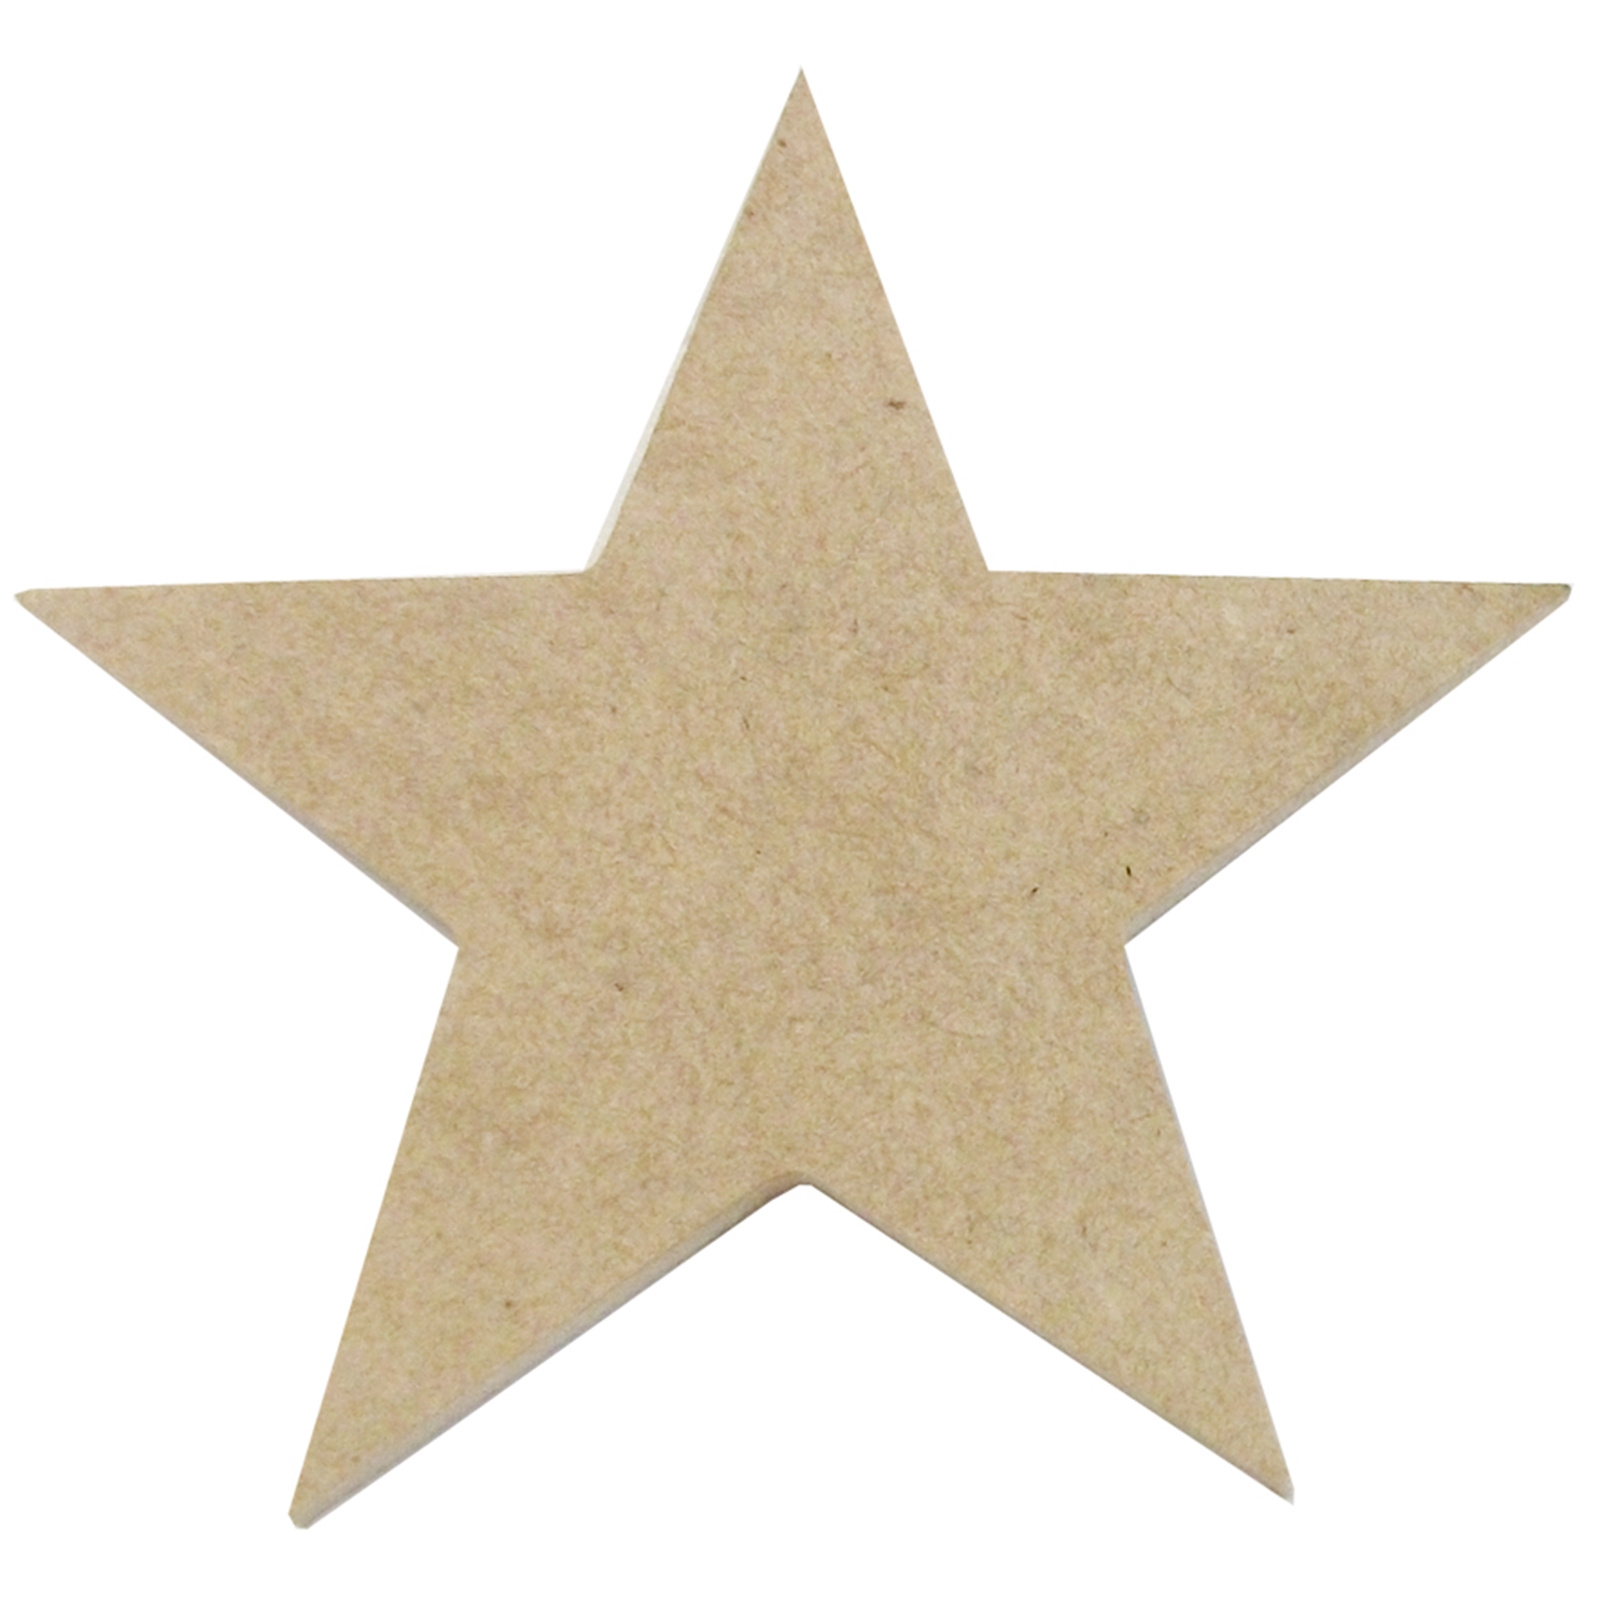 Boyle Medium Craftwood Star